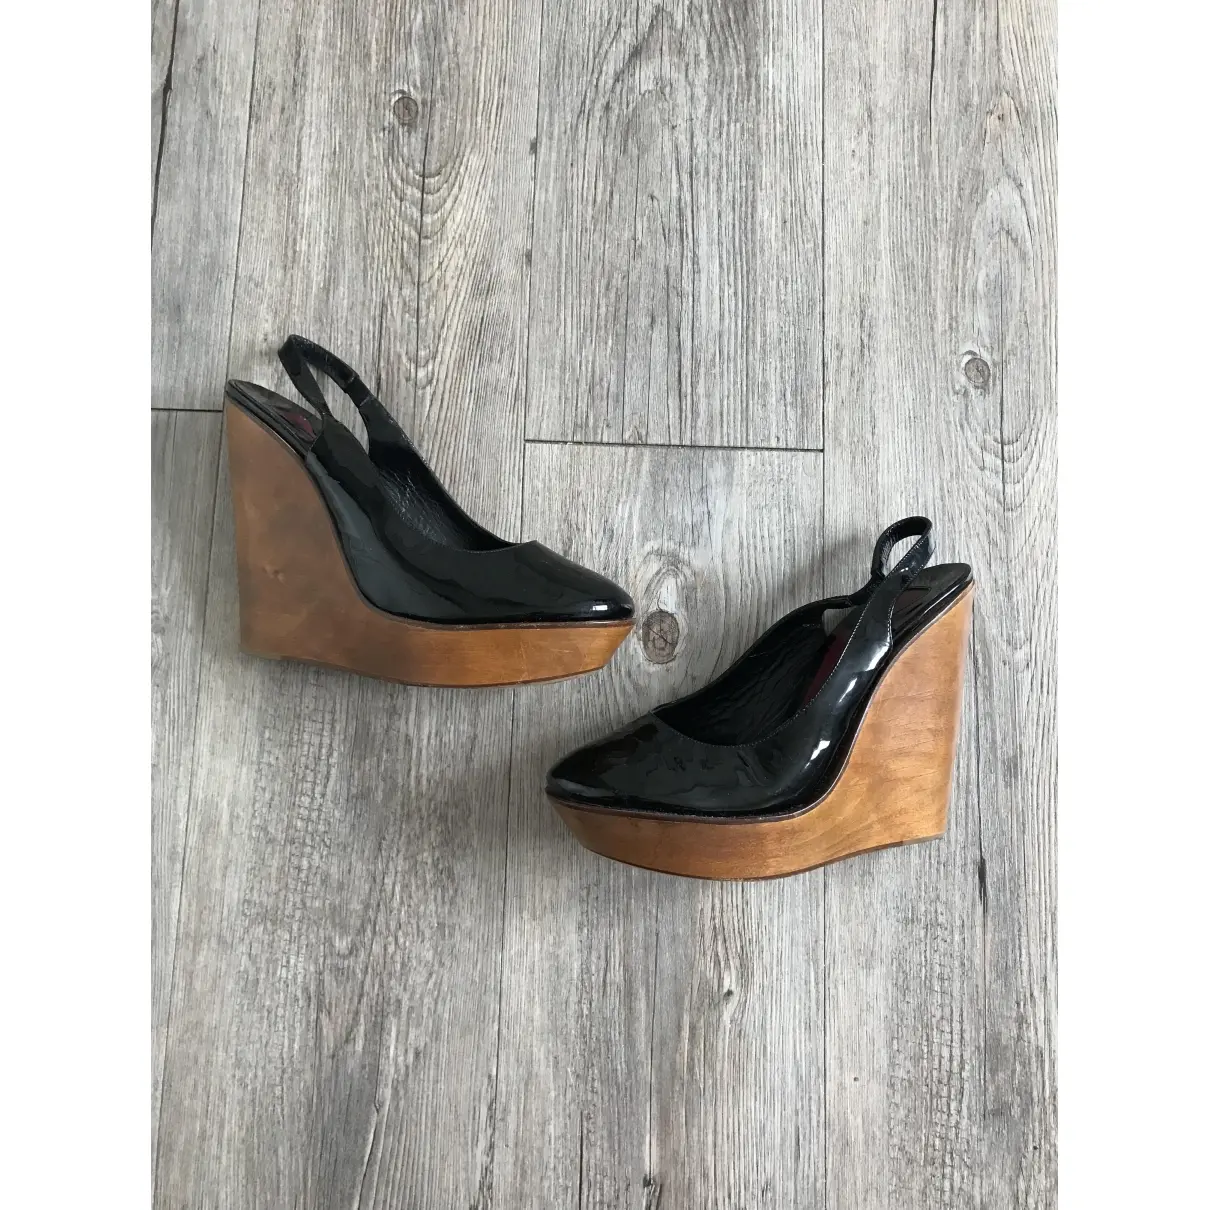 Buy Chloé Patent leather heels online